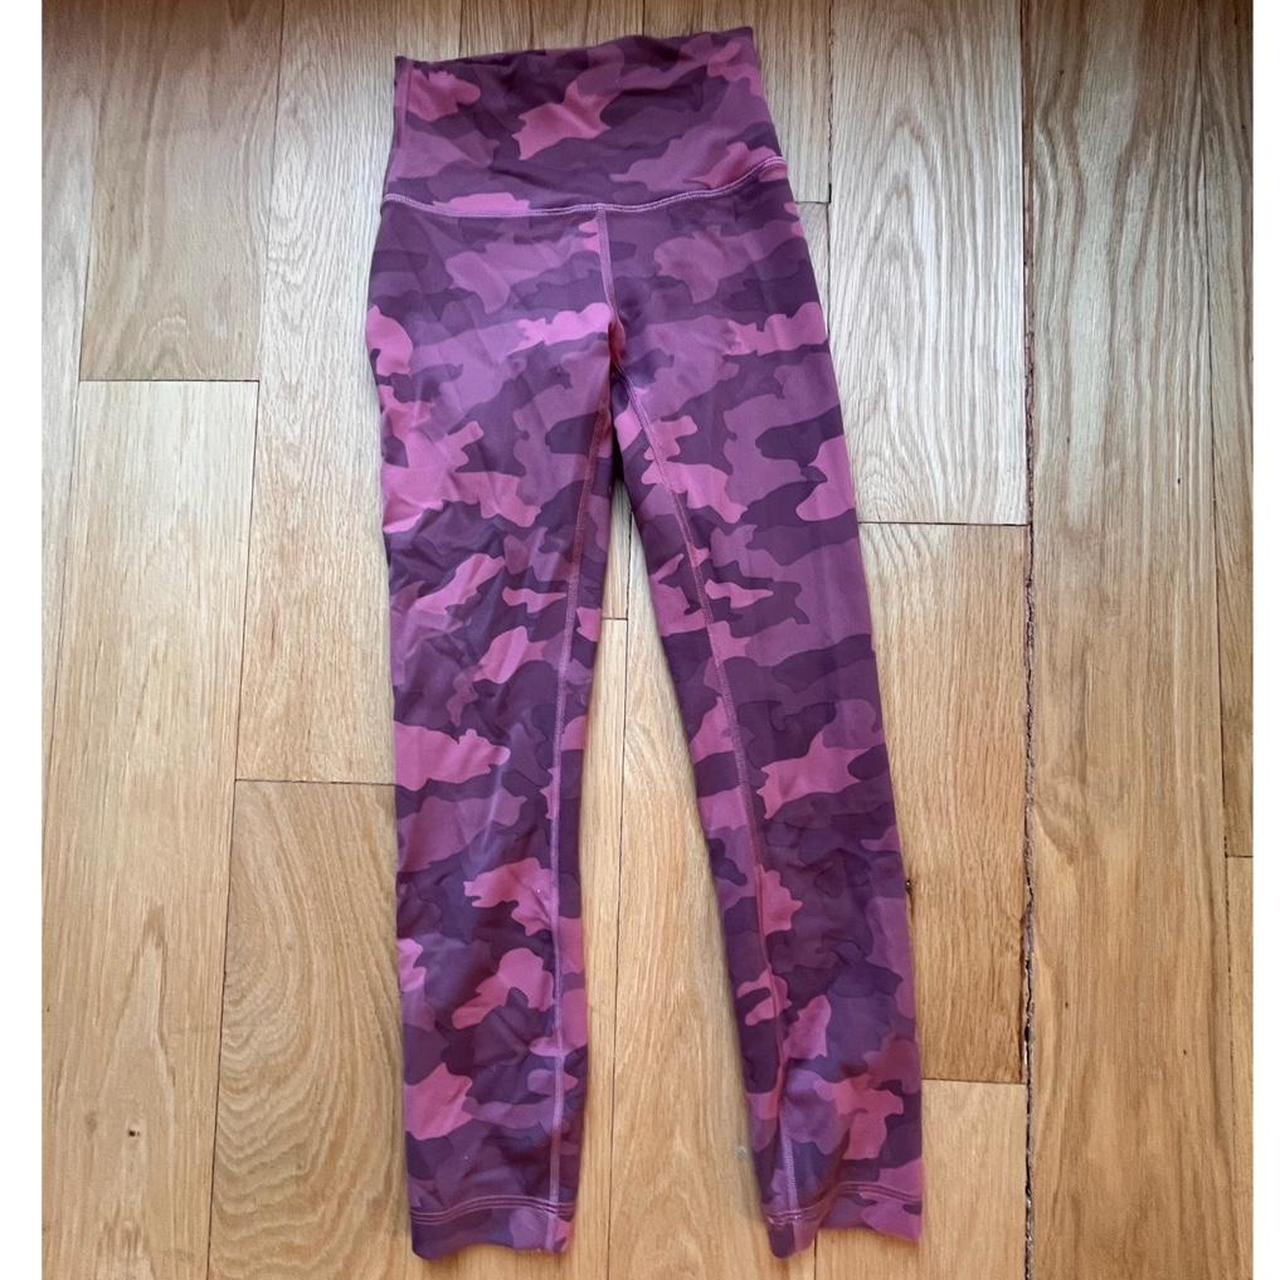 Lululemon Pink Camo Print Leggings – Double Take